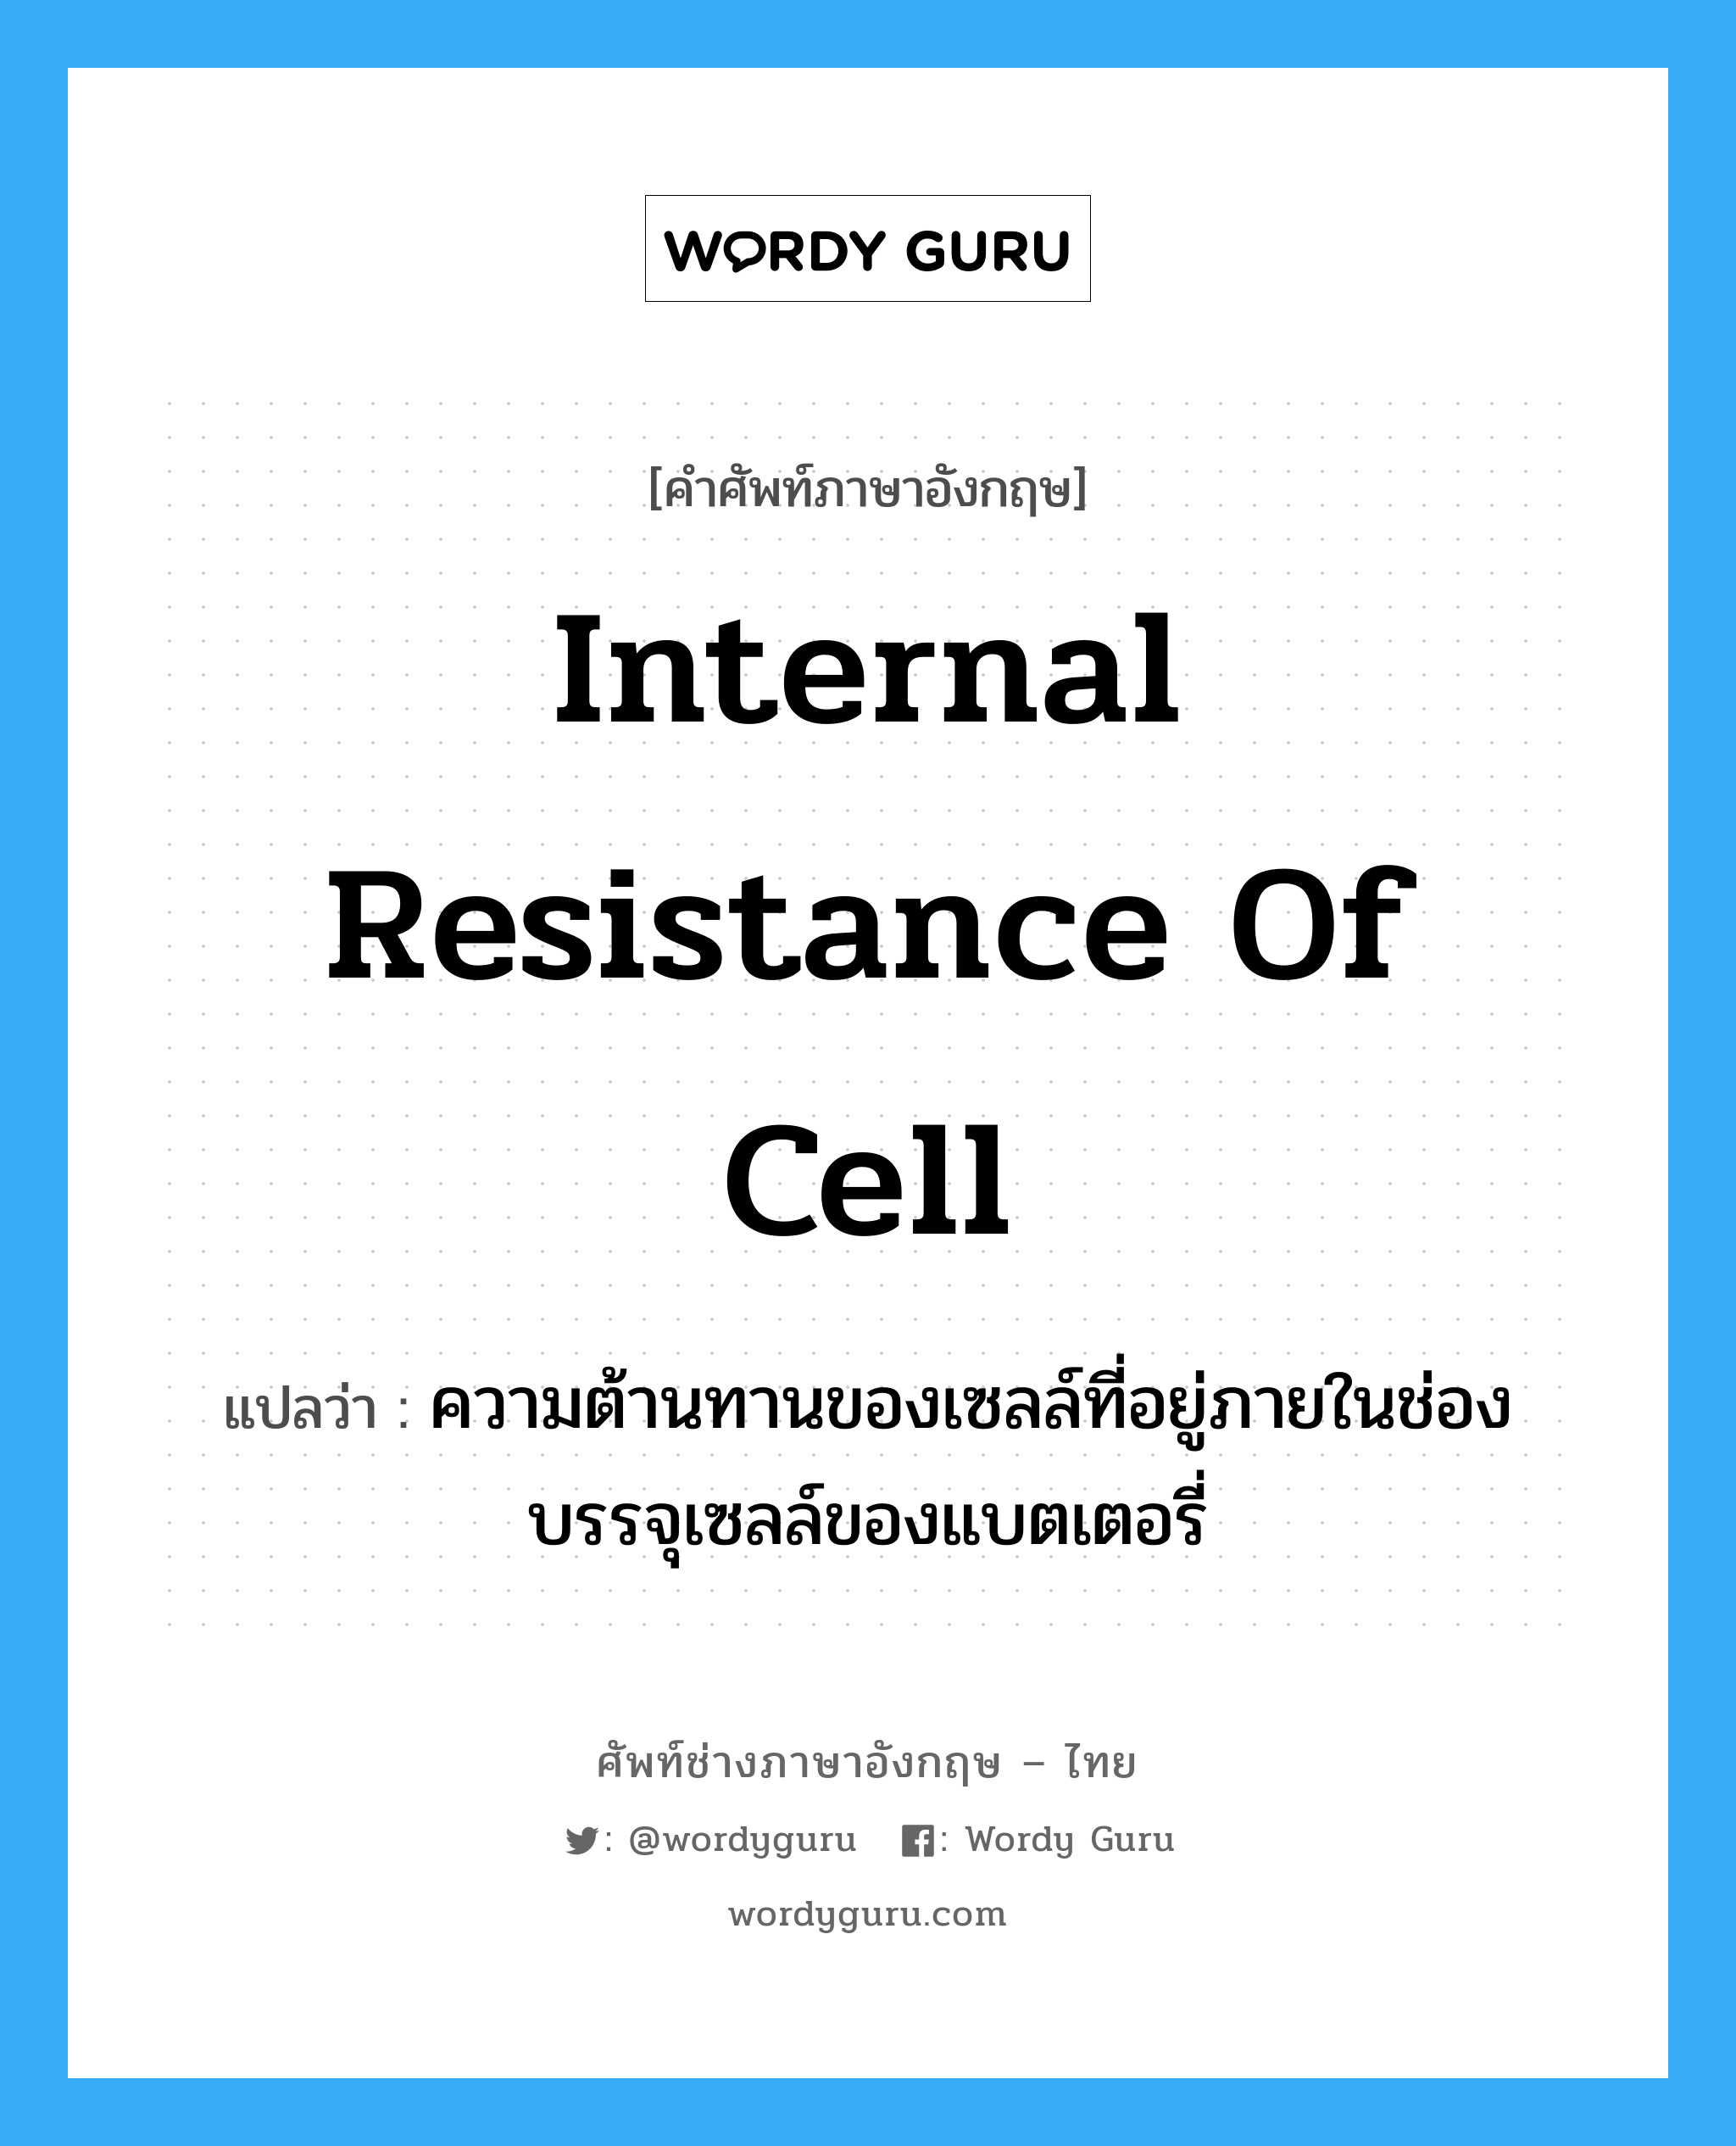 internal resistance of cell แปลว่า?, คำศัพท์ช่างภาษาอังกฤษ - ไทย internal resistance of cell คำศัพท์ภาษาอังกฤษ internal resistance of cell แปลว่า ความต้านทานของเซลล์ที่อยู่ภายในช่องบรรจุเซลล์ของแบตเตอรี่